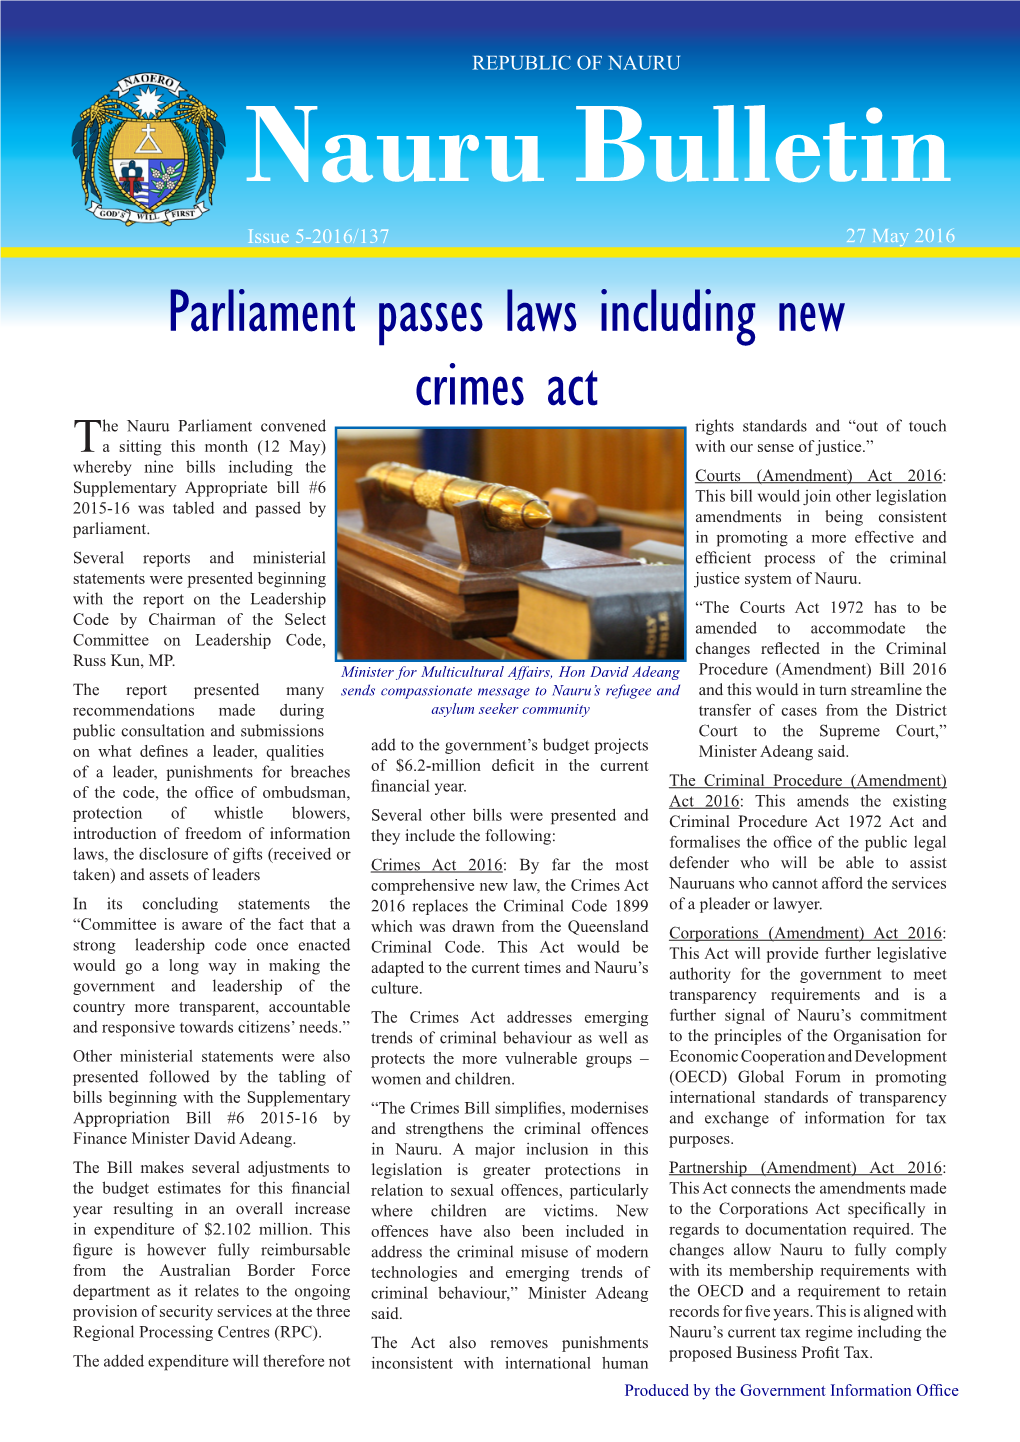 Parliament Passes Laws Including New Crimes